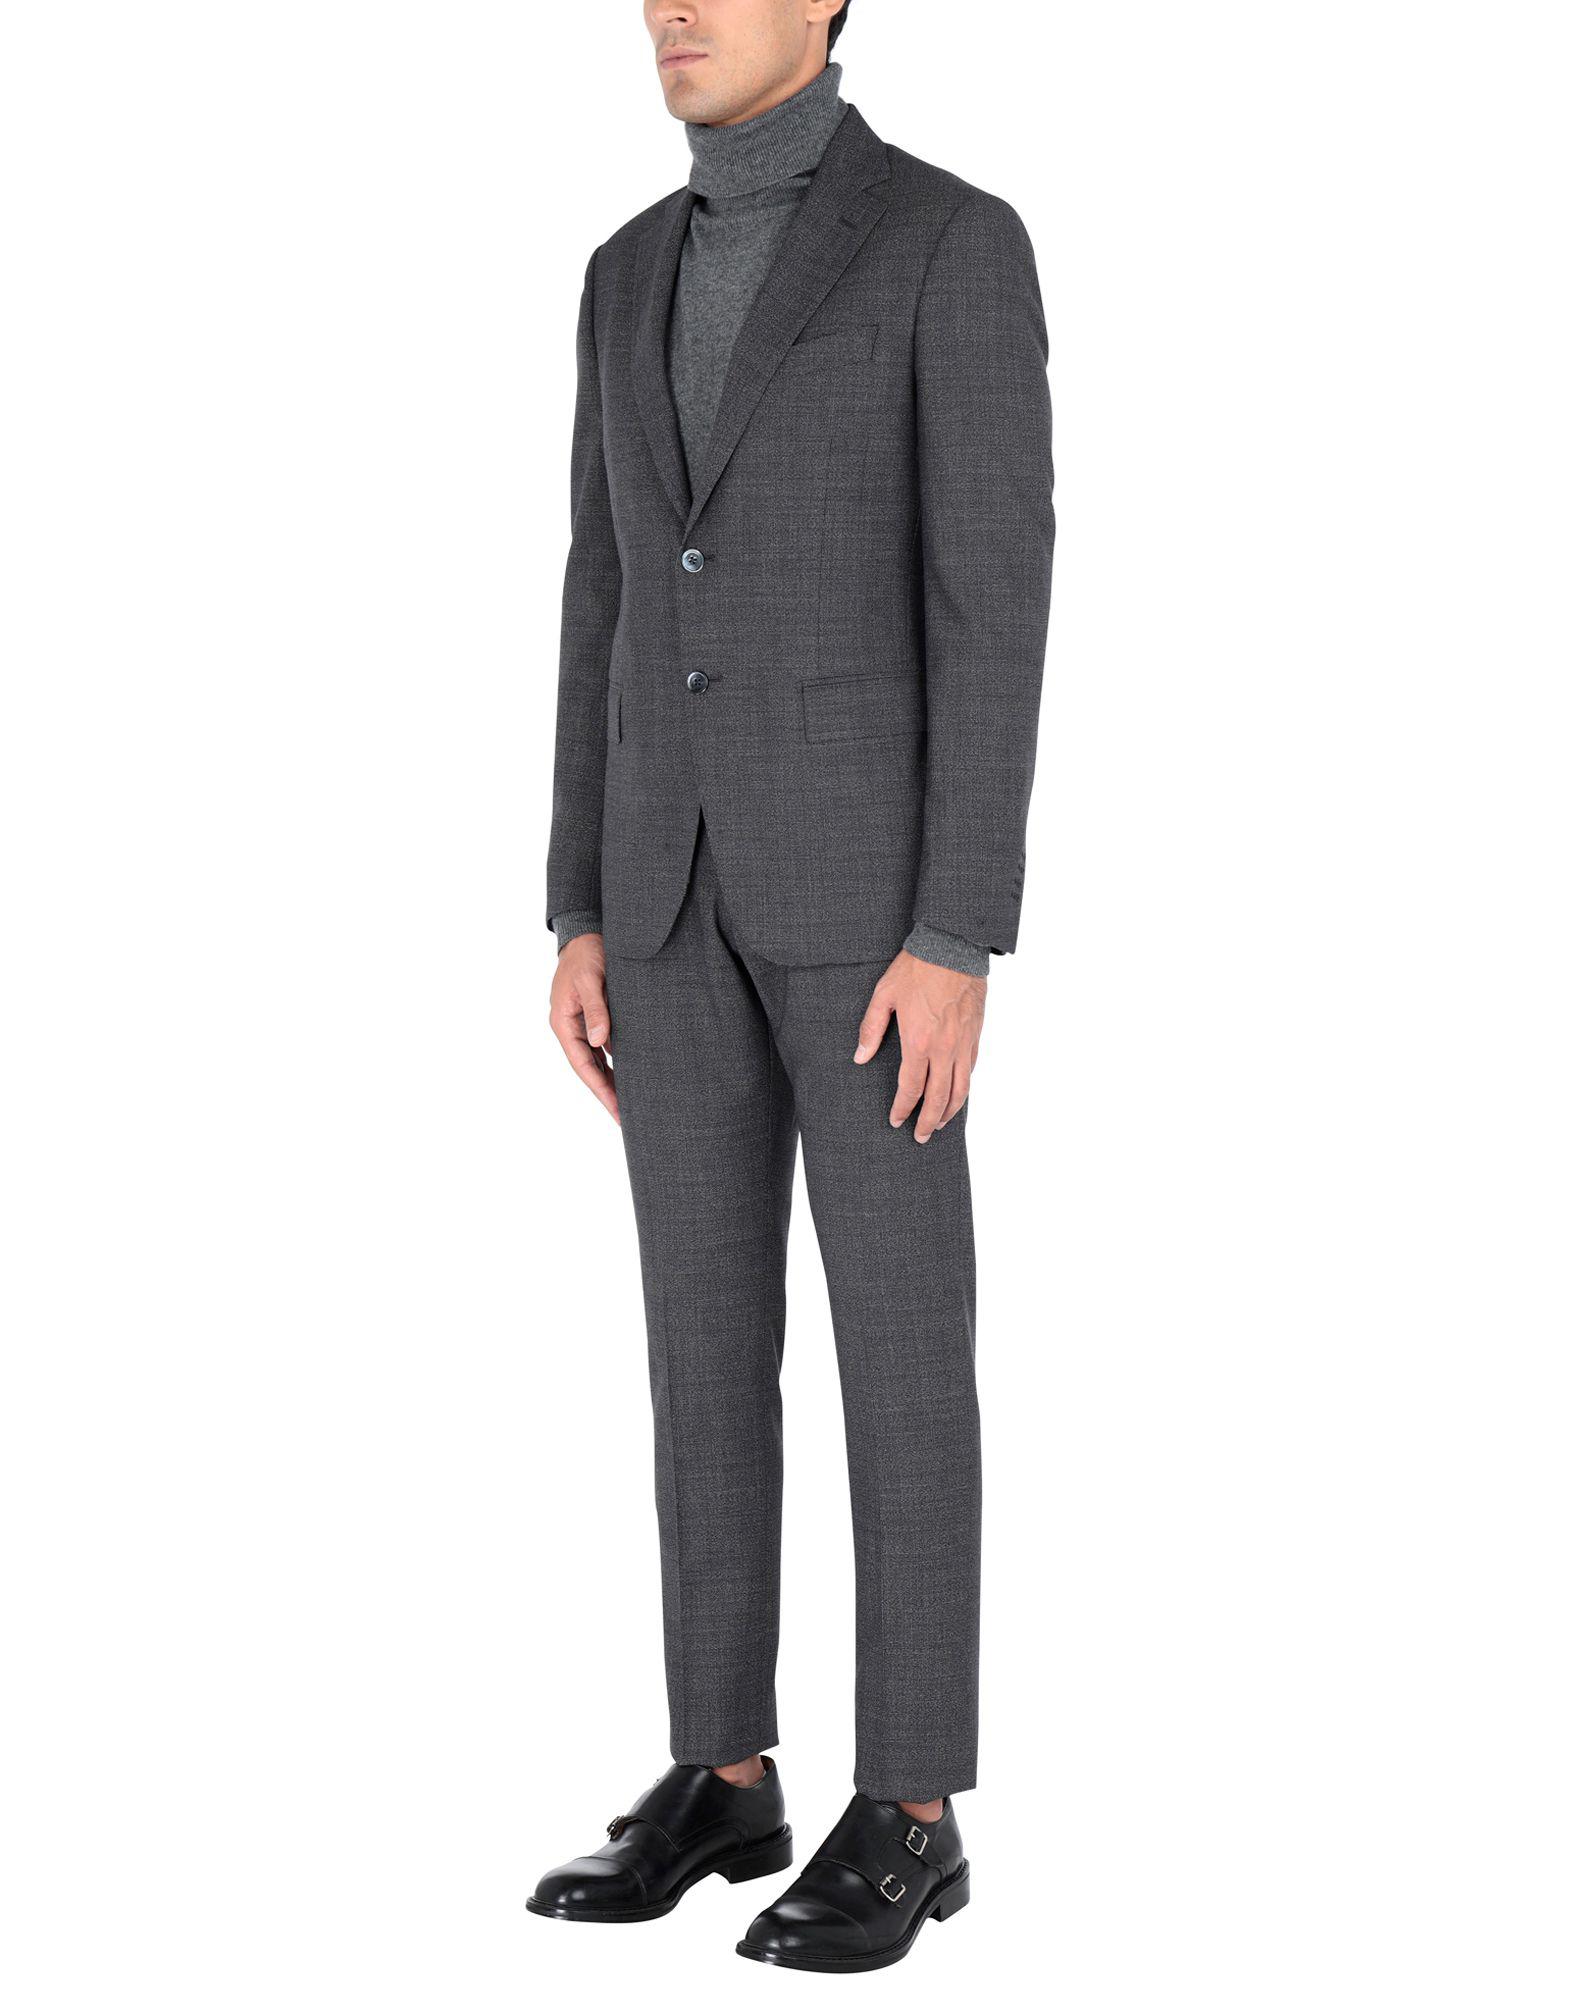 Bagnoli Sartoria Napoli Suit in Grey (Gray) for Men - Lyst